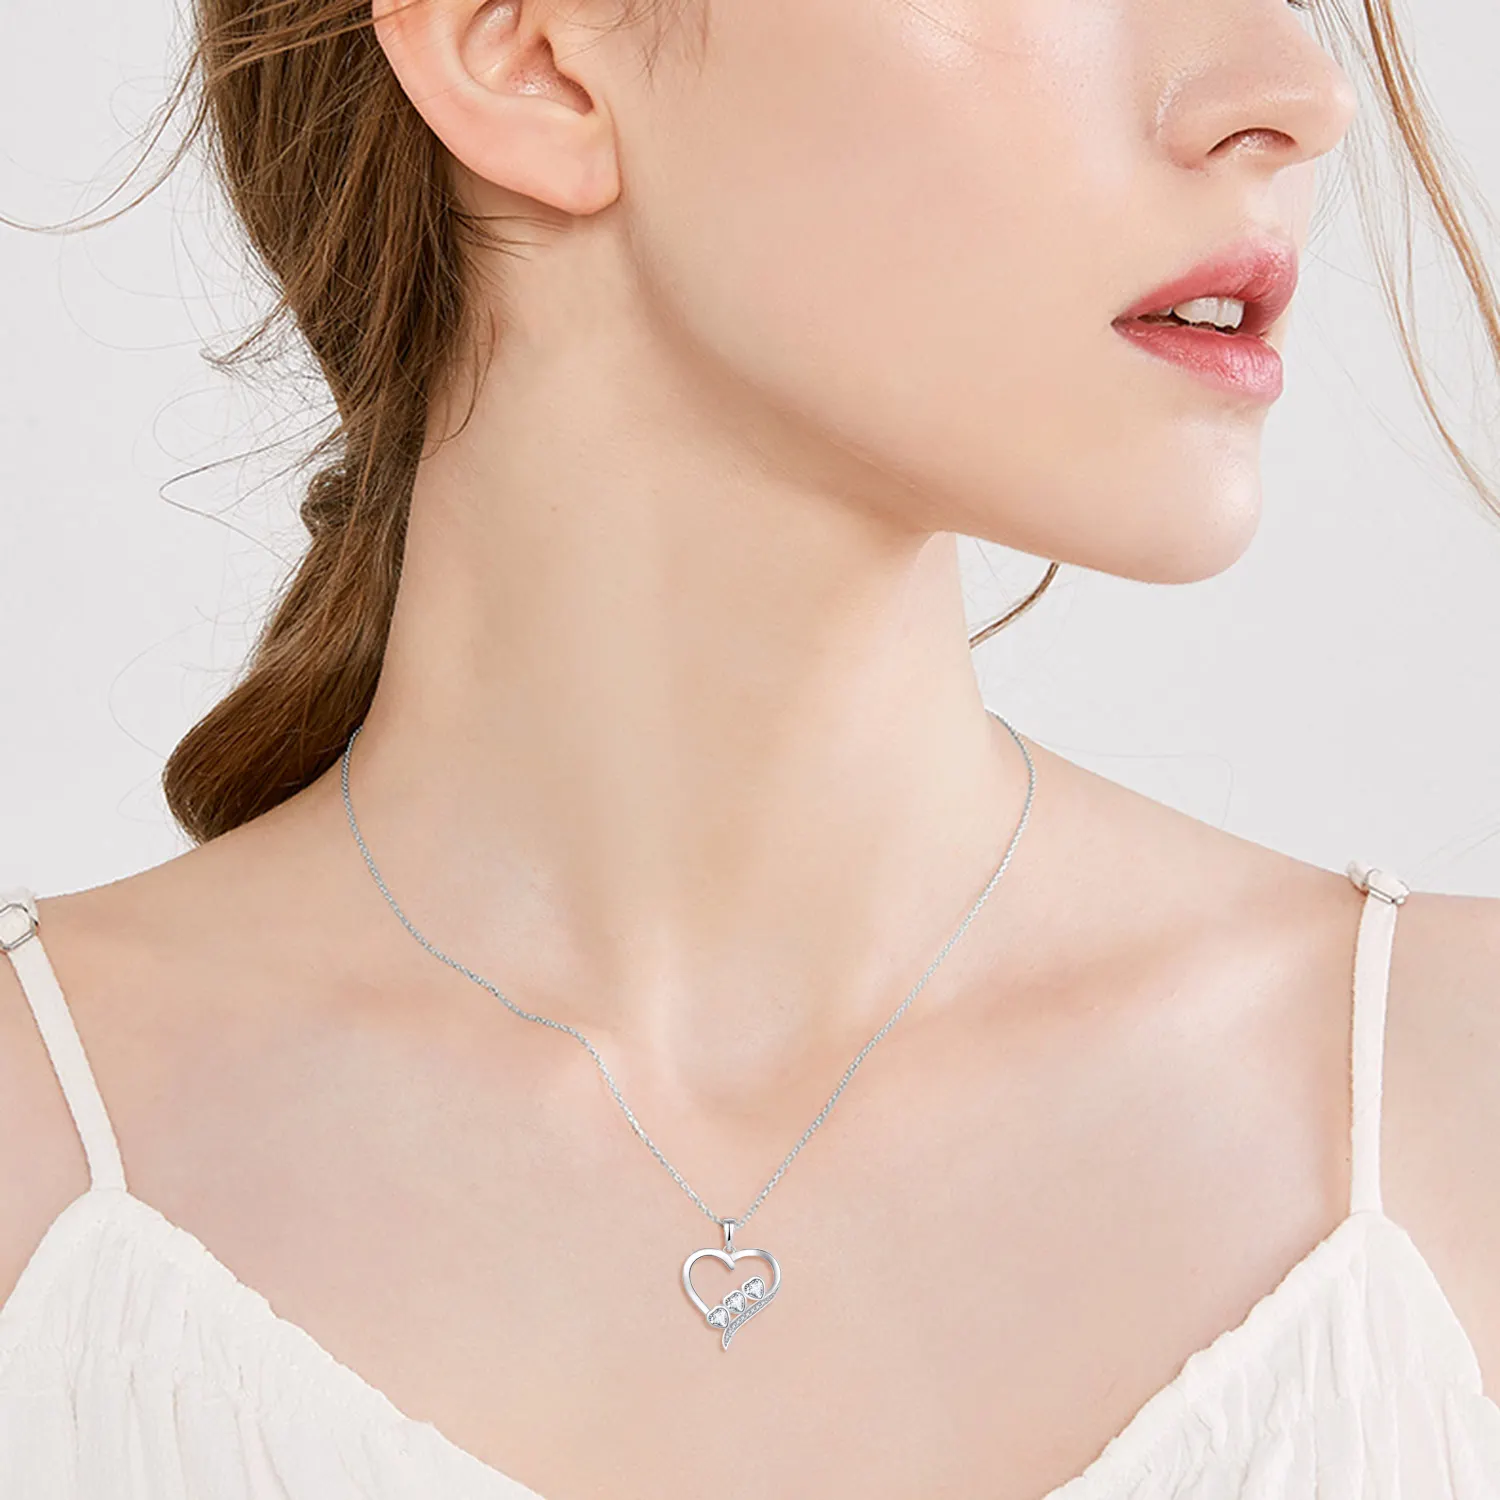 Colgante de corazón para mujer, collar de cadena de Plata de Ley 925, regalo de moda